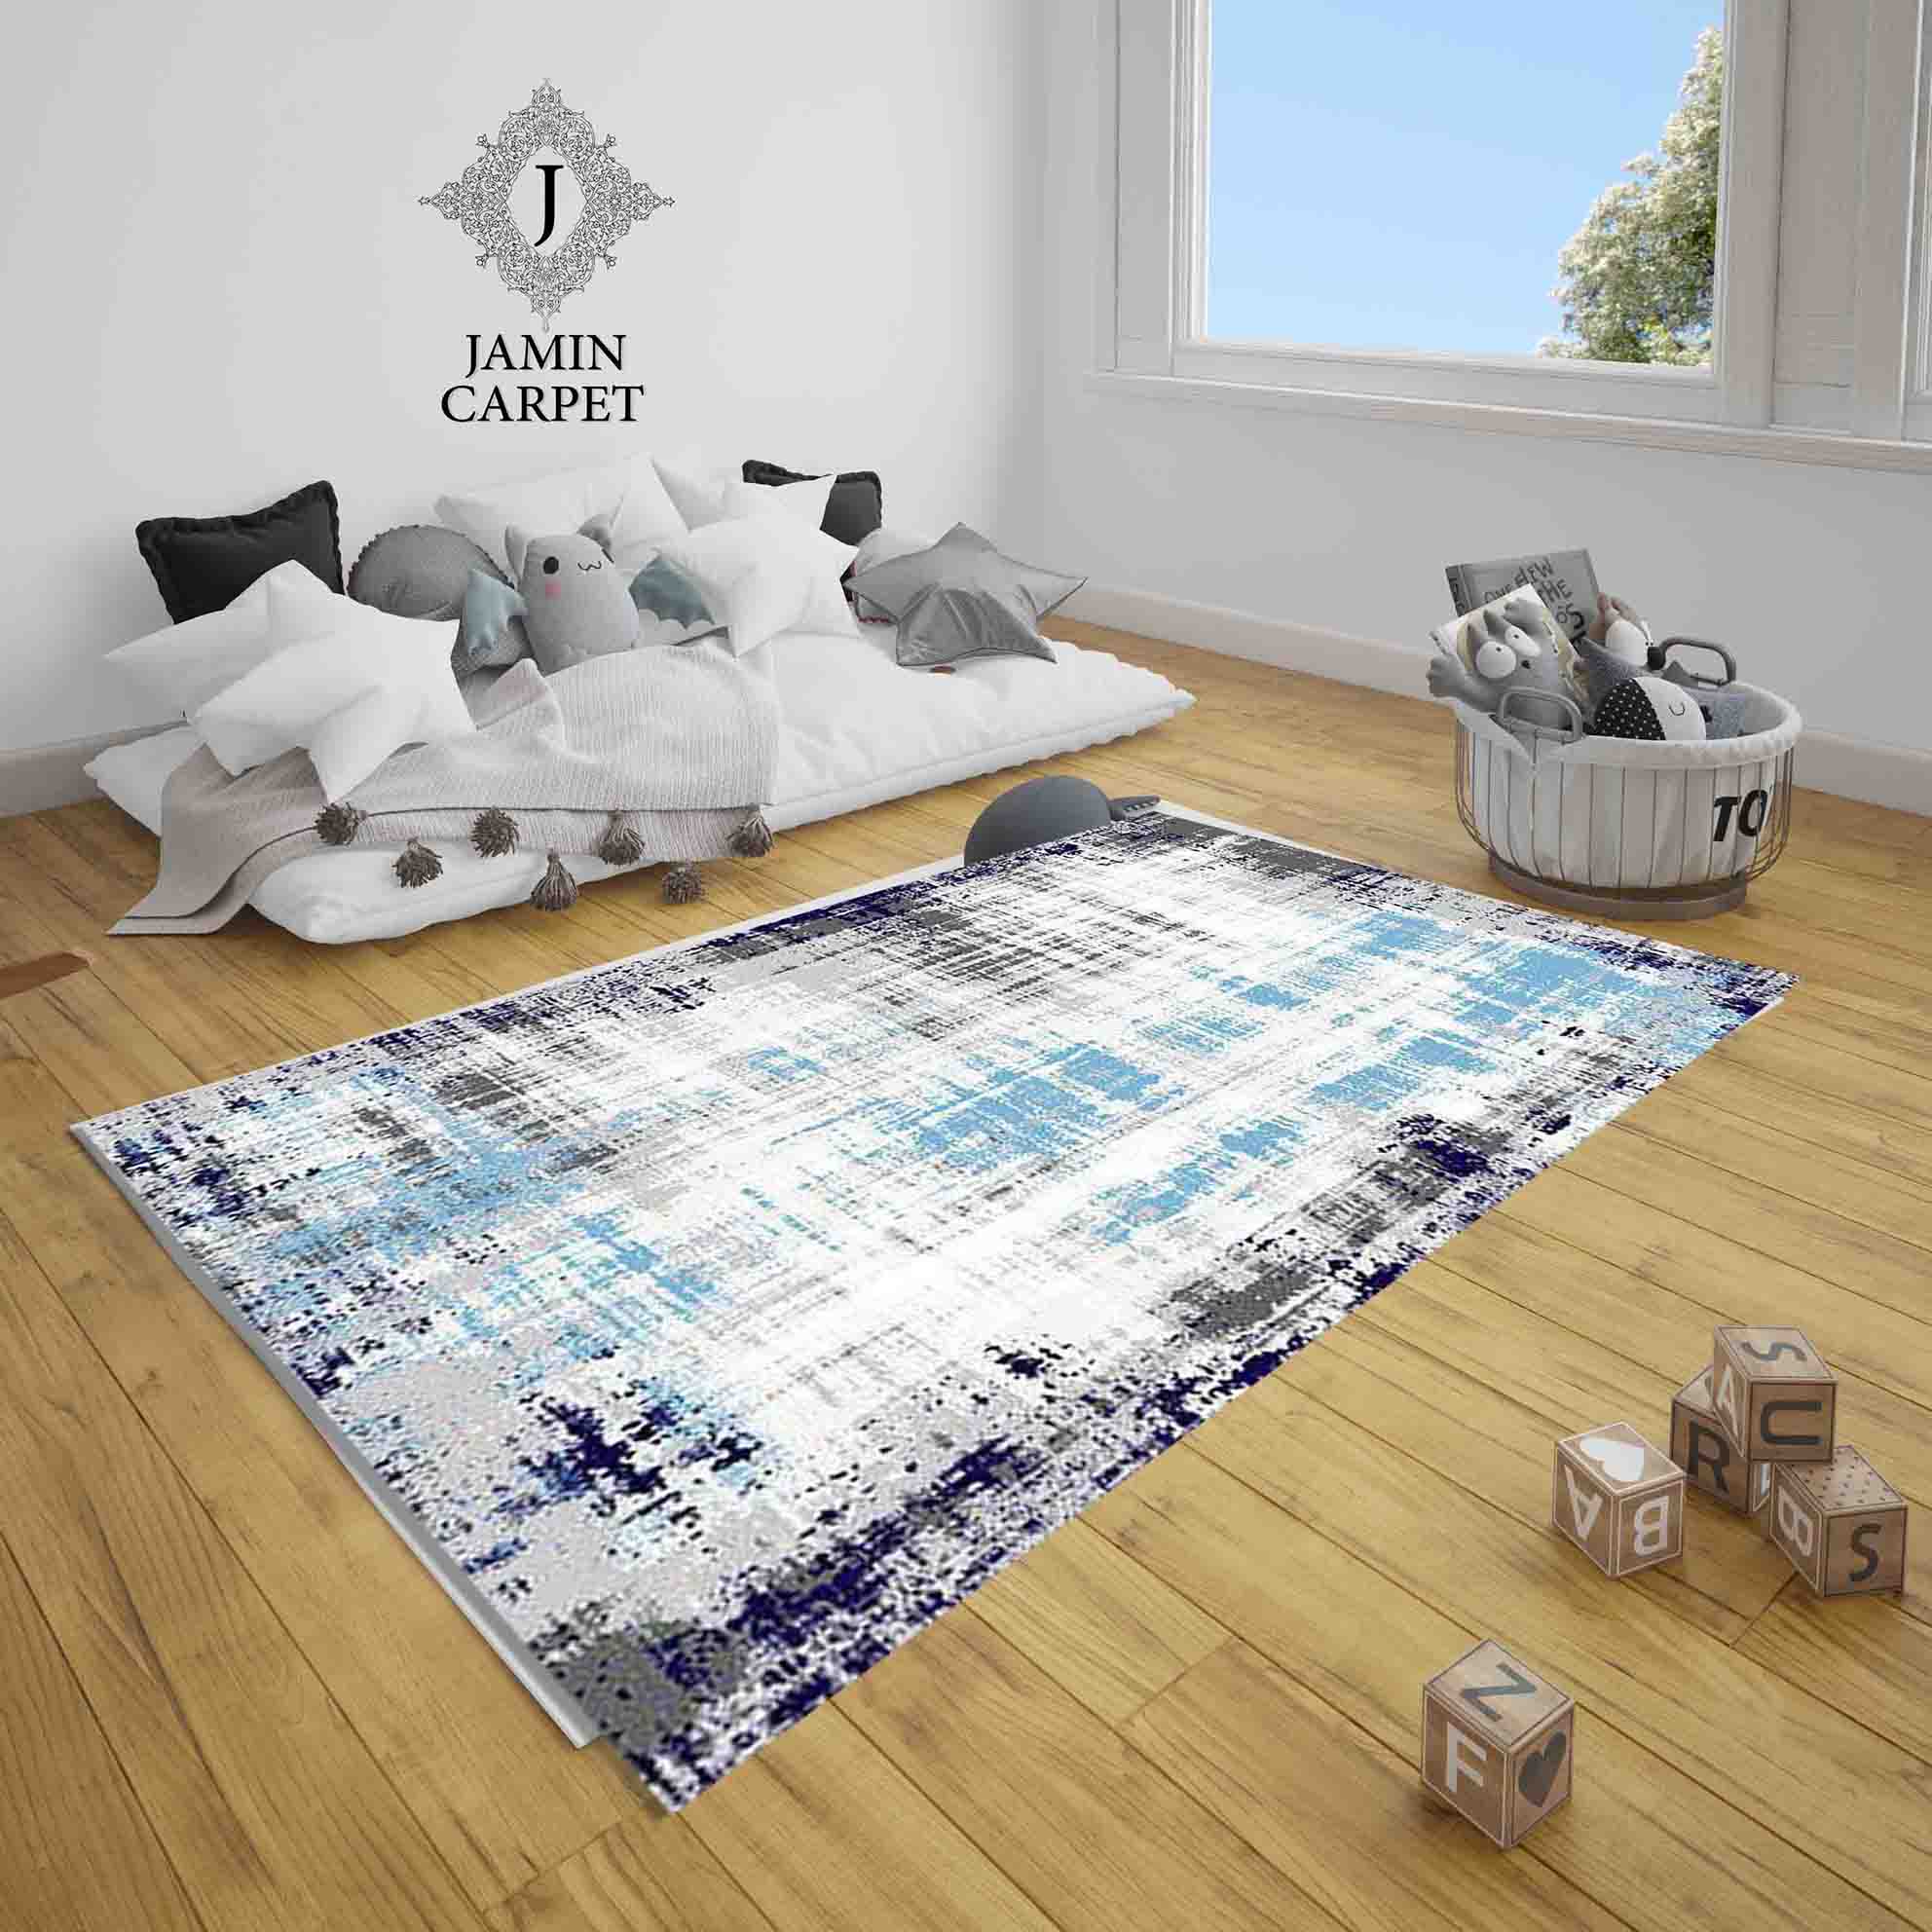 Fantasy carpet, code 271, comb 400, density 1800, all acrylic